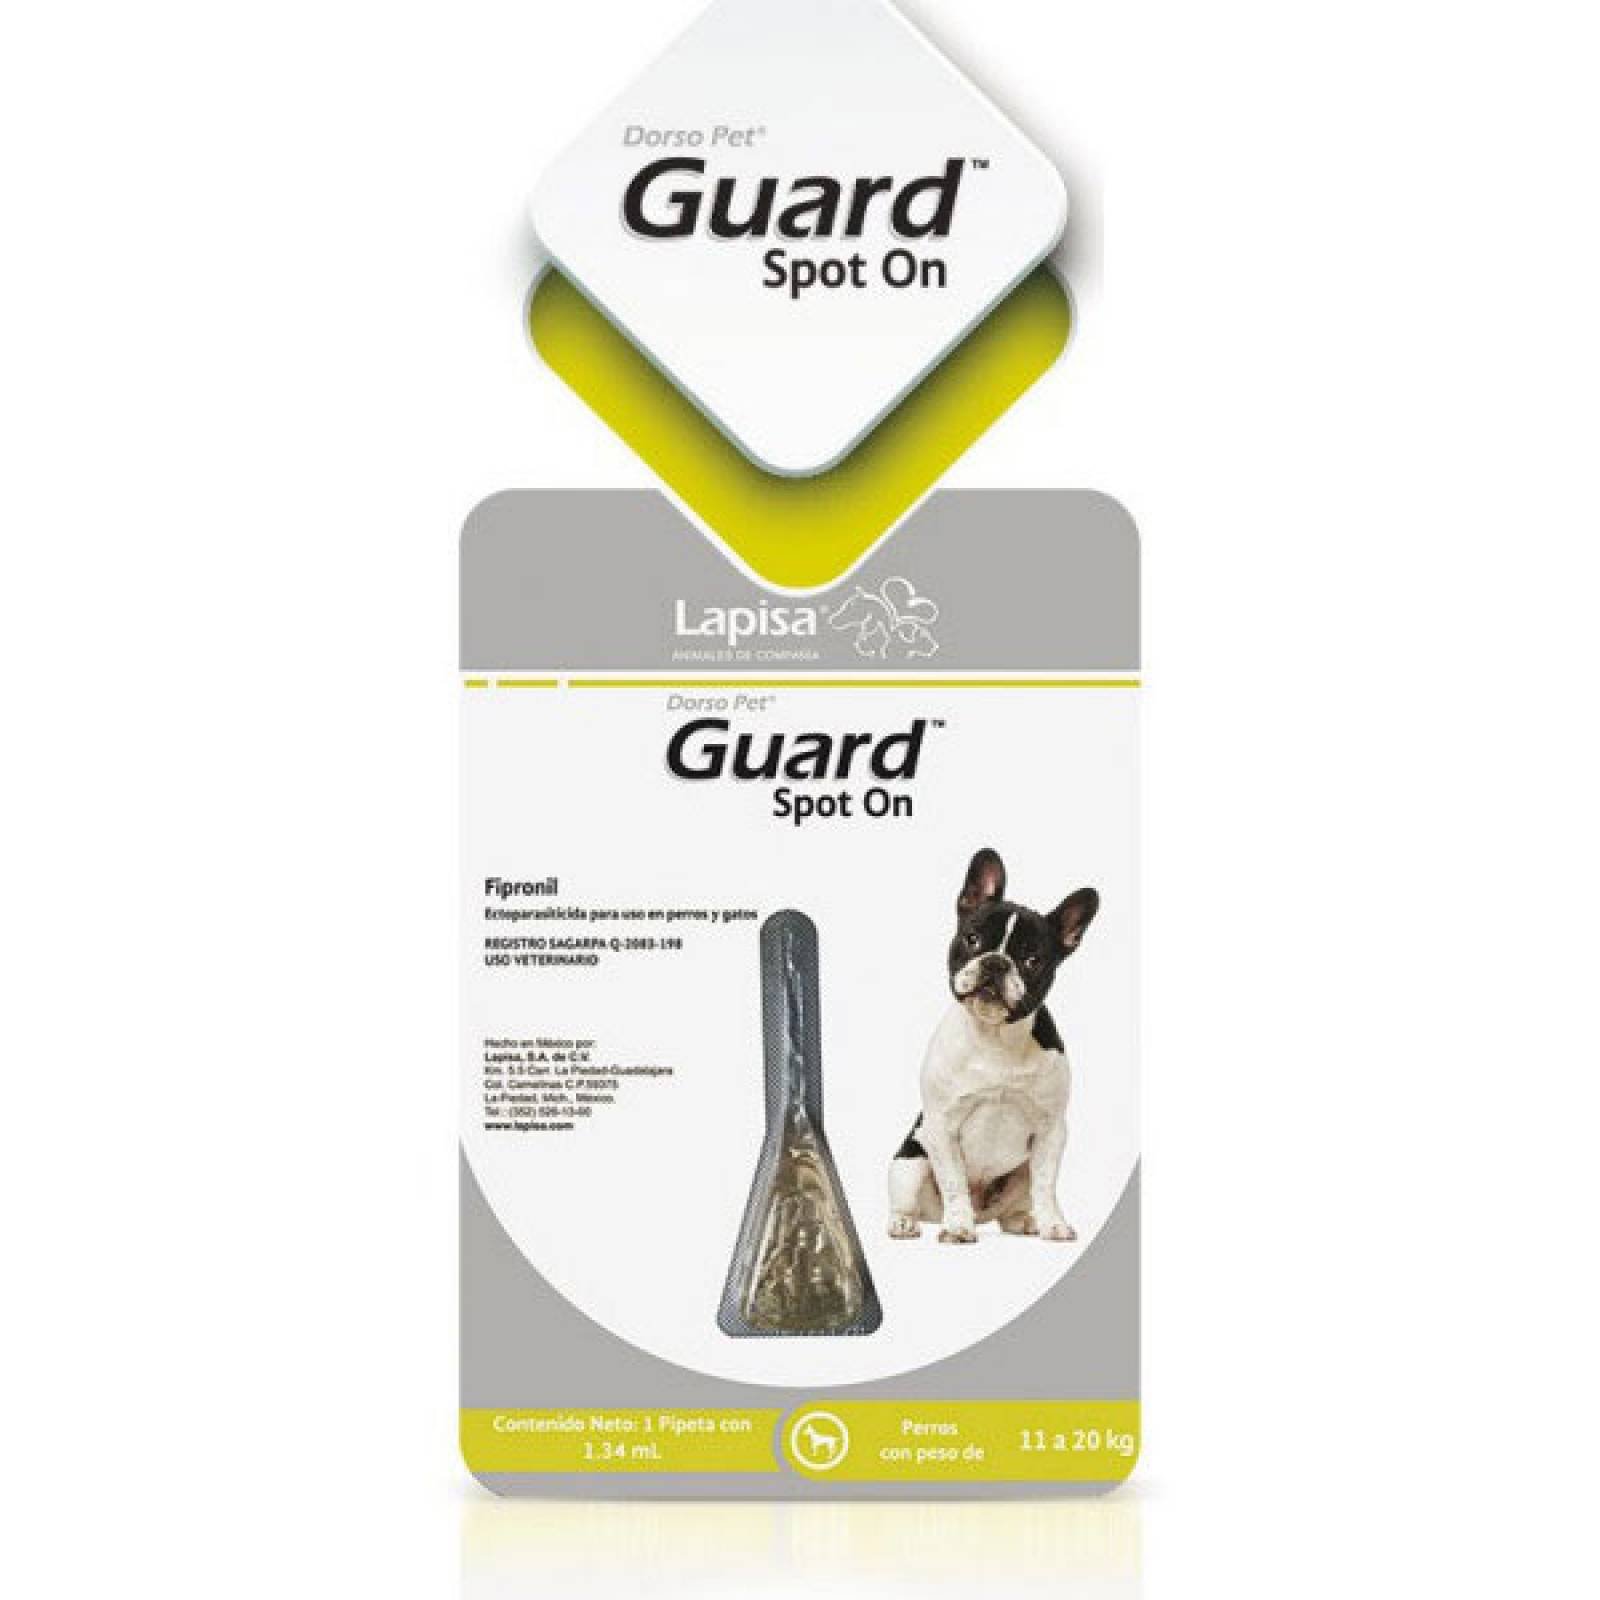 Dorso Pet Guard Spot para Perro Grande 1 pipeta x 2.68 ml